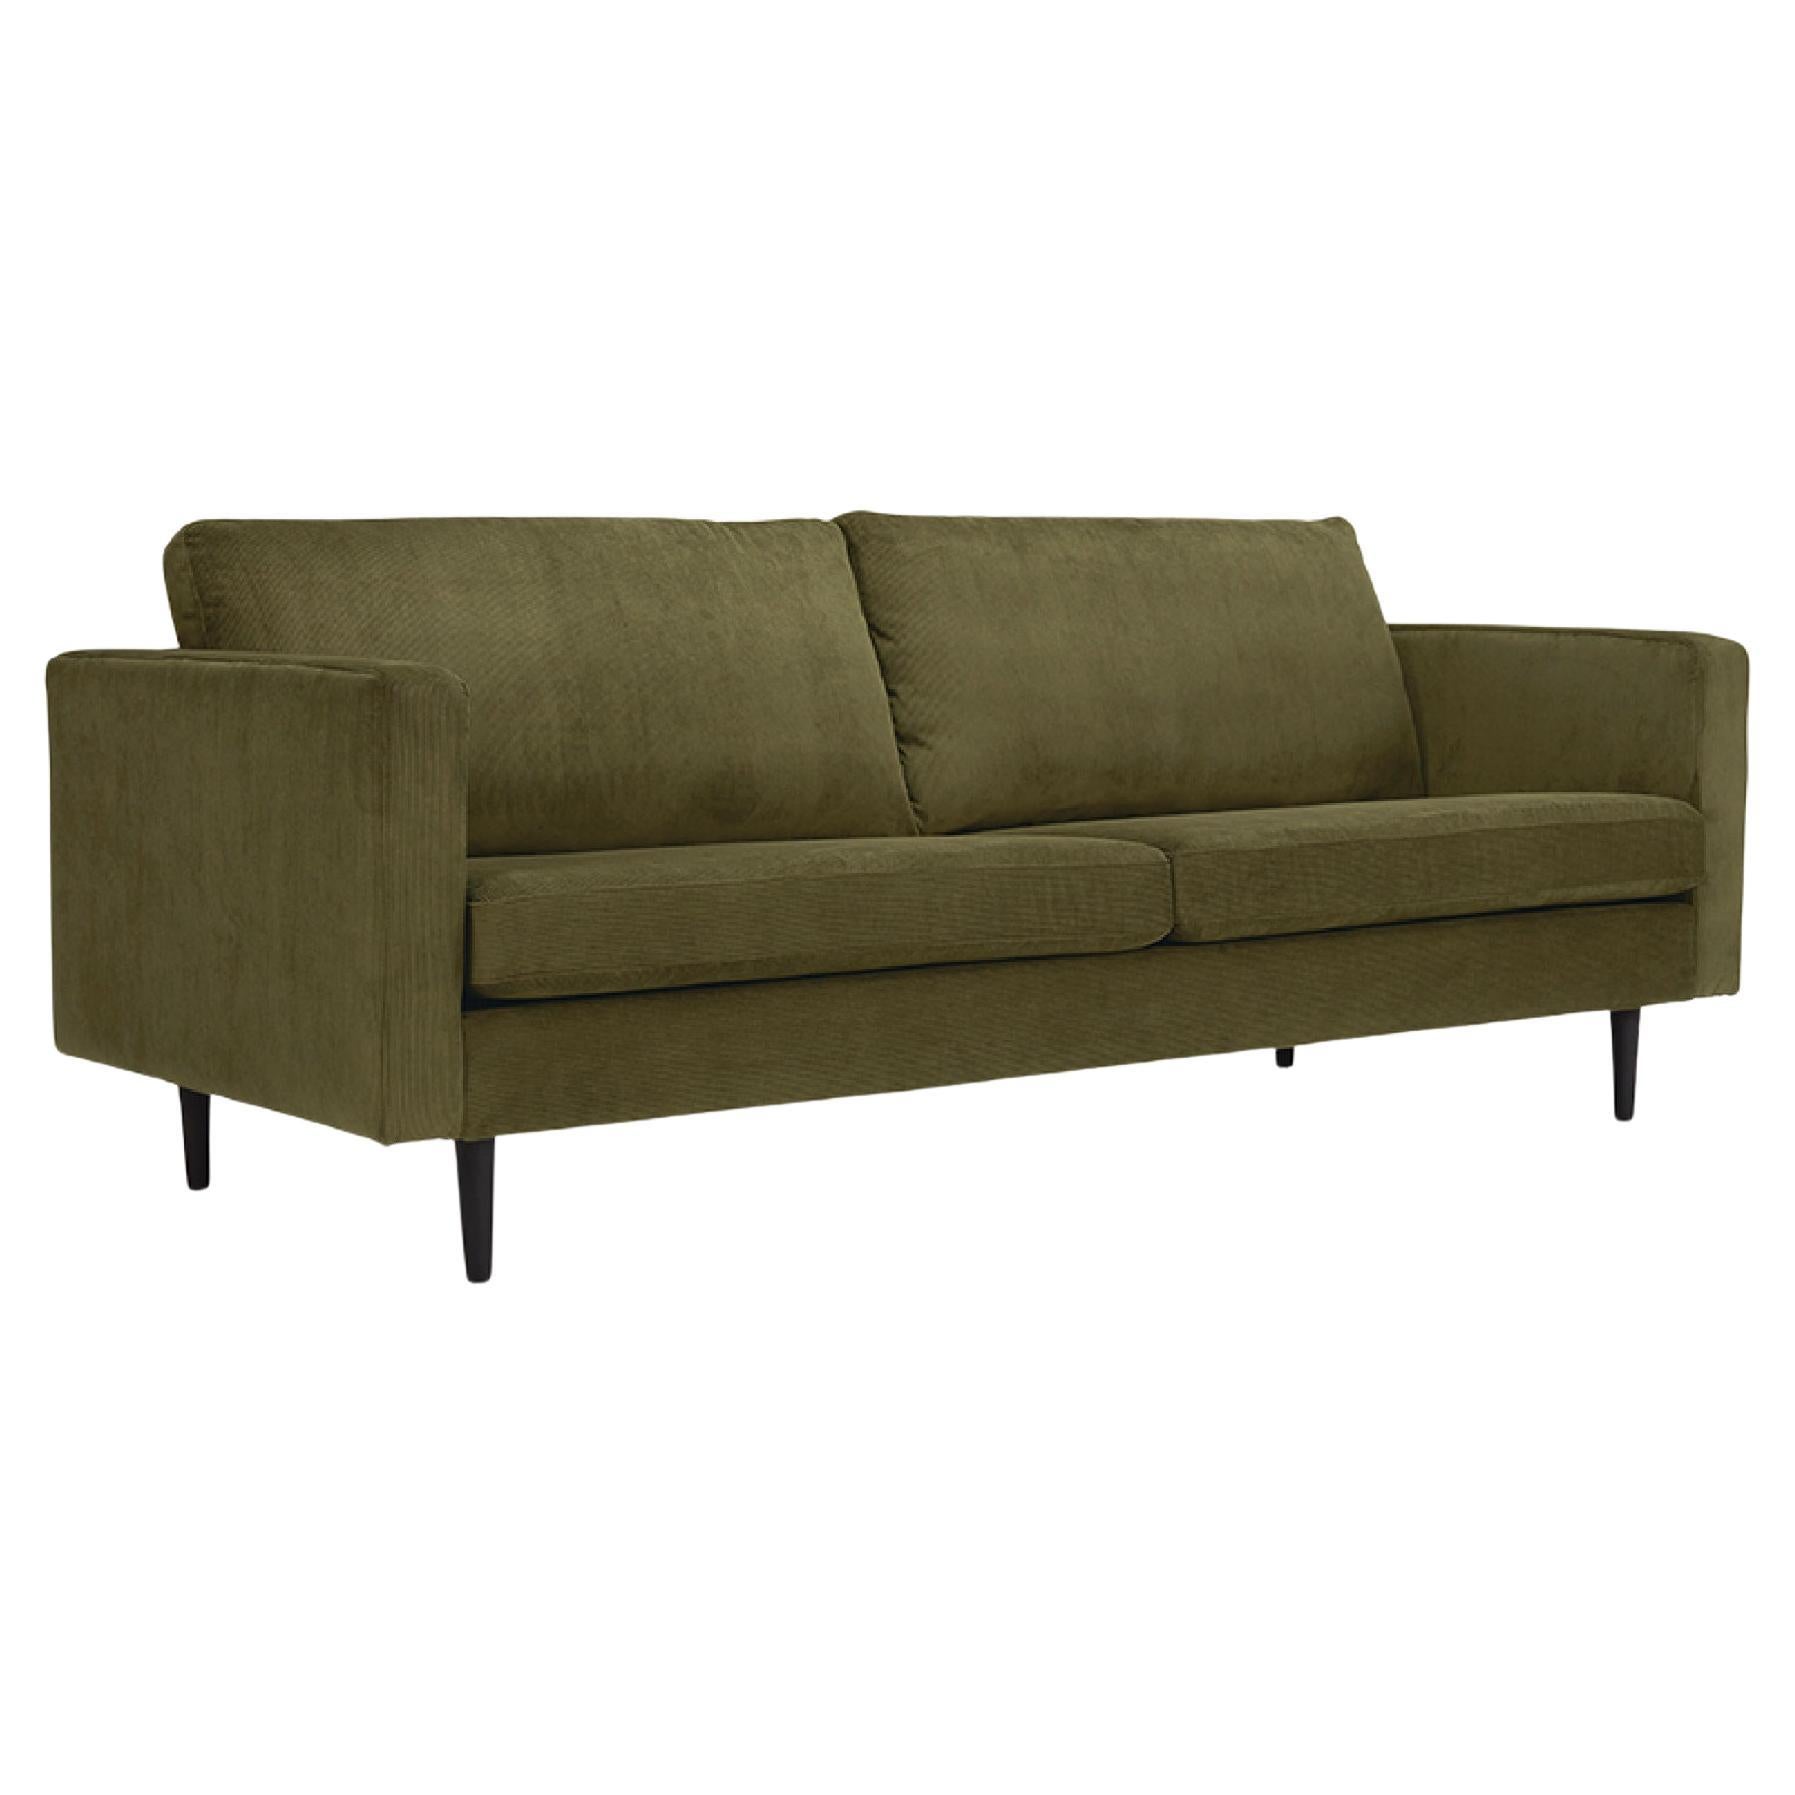 Hayche Clasico 3 Seater Sofa - Green Velvet, UK, Made to Order